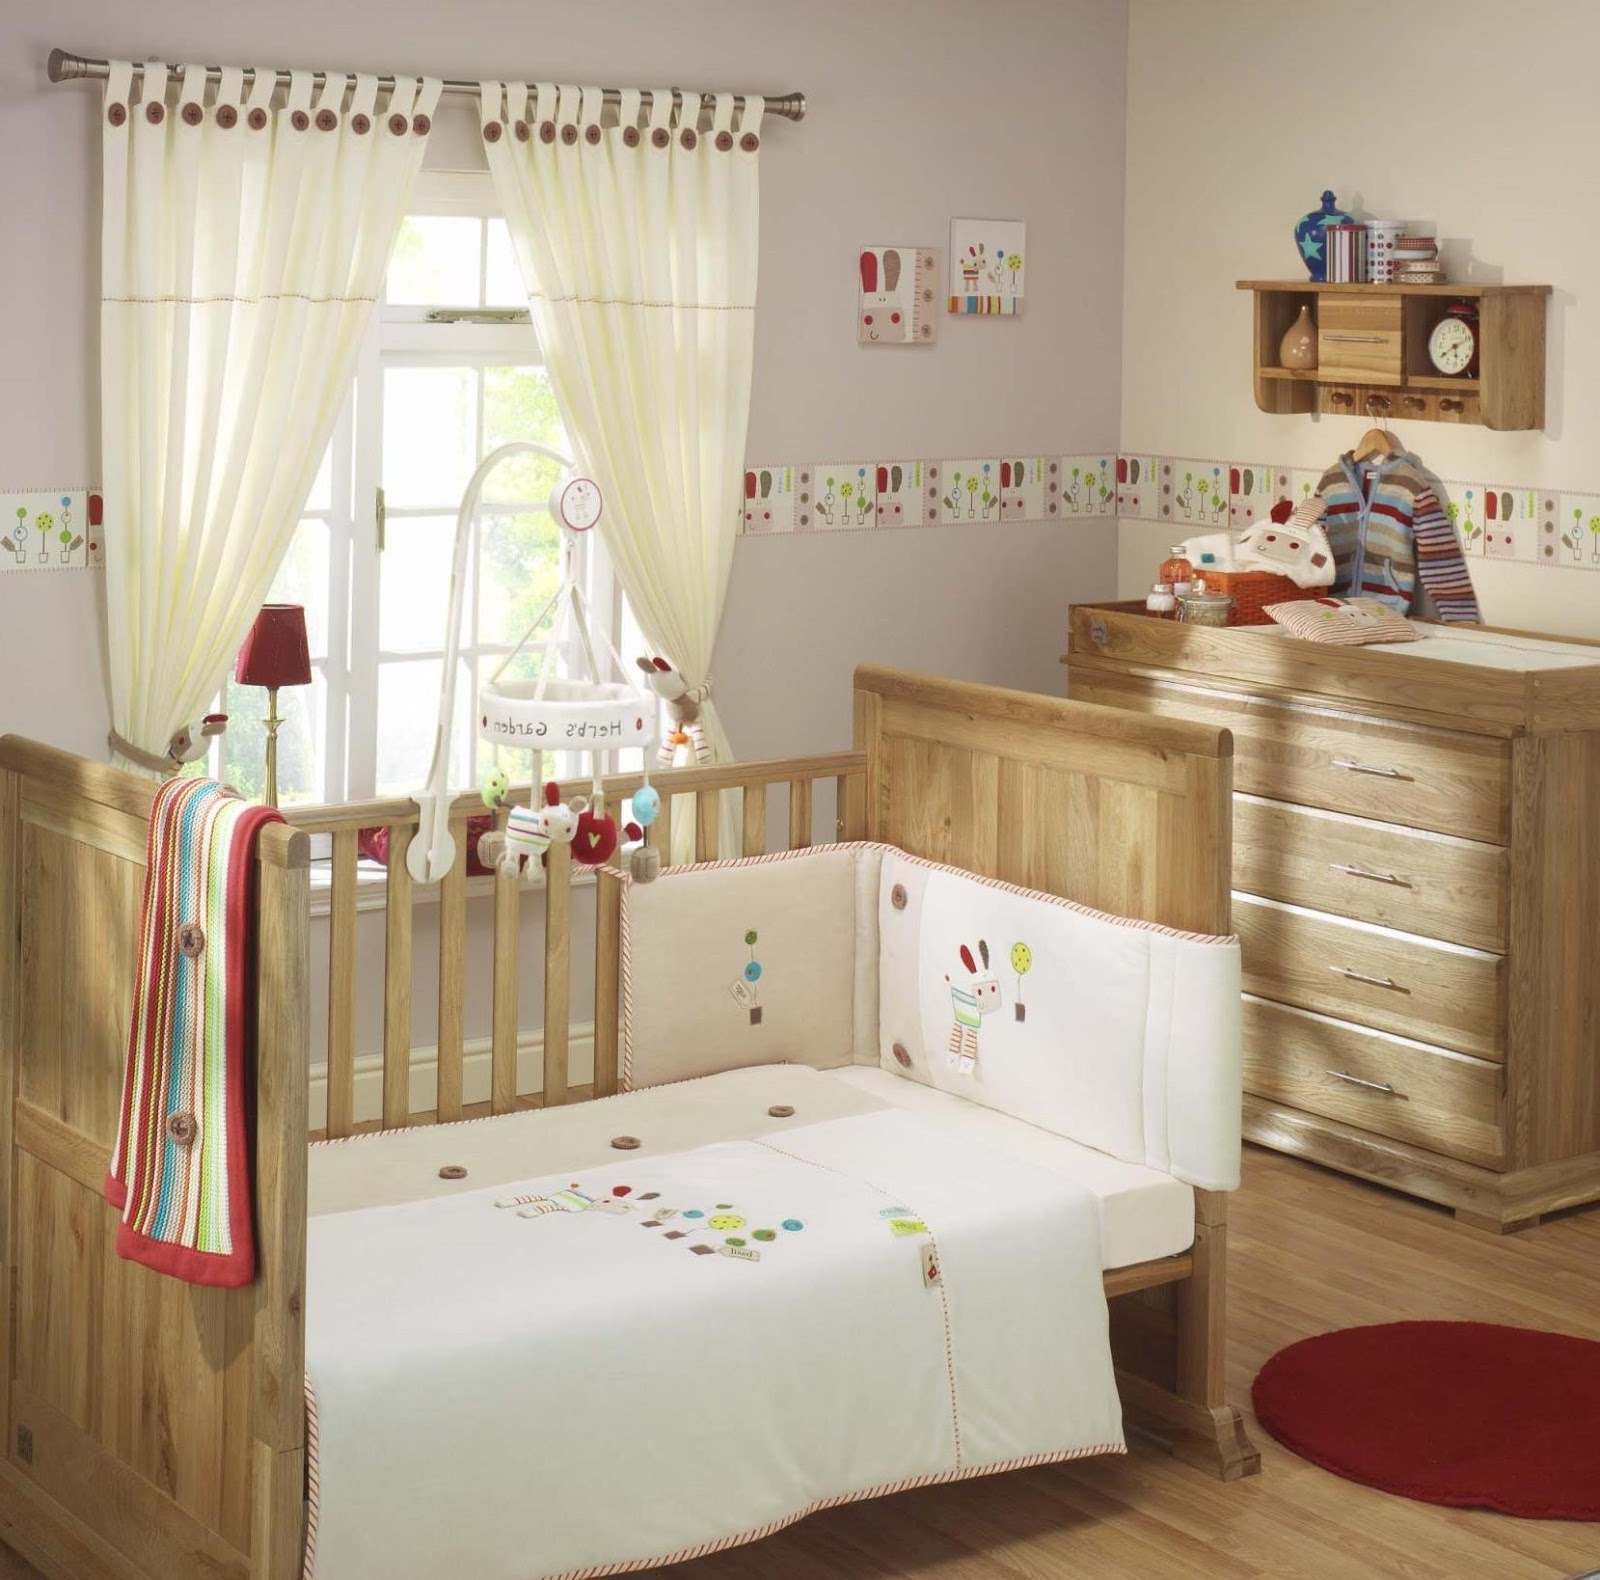 14 Baby Bedroom Design Ideas-7 saveemail baby boy bedding design idea with matching decor  Baby,Bedroom,Design,Ideas